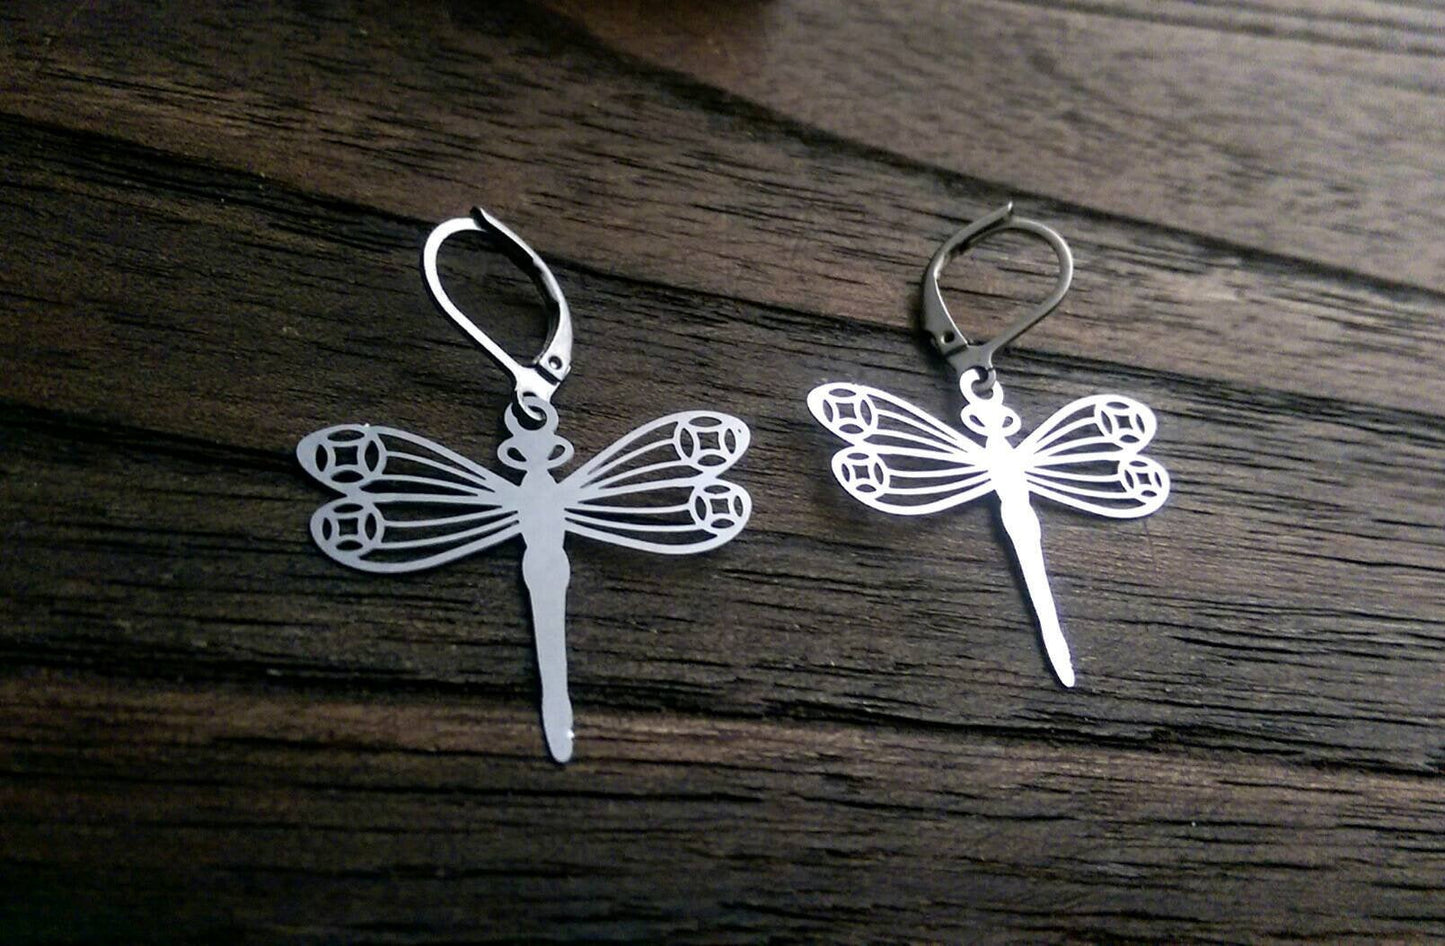 Dragonfly Filigree Leverback Earrings, Stainless Steel Dangle Leverback or Hook Earrings.